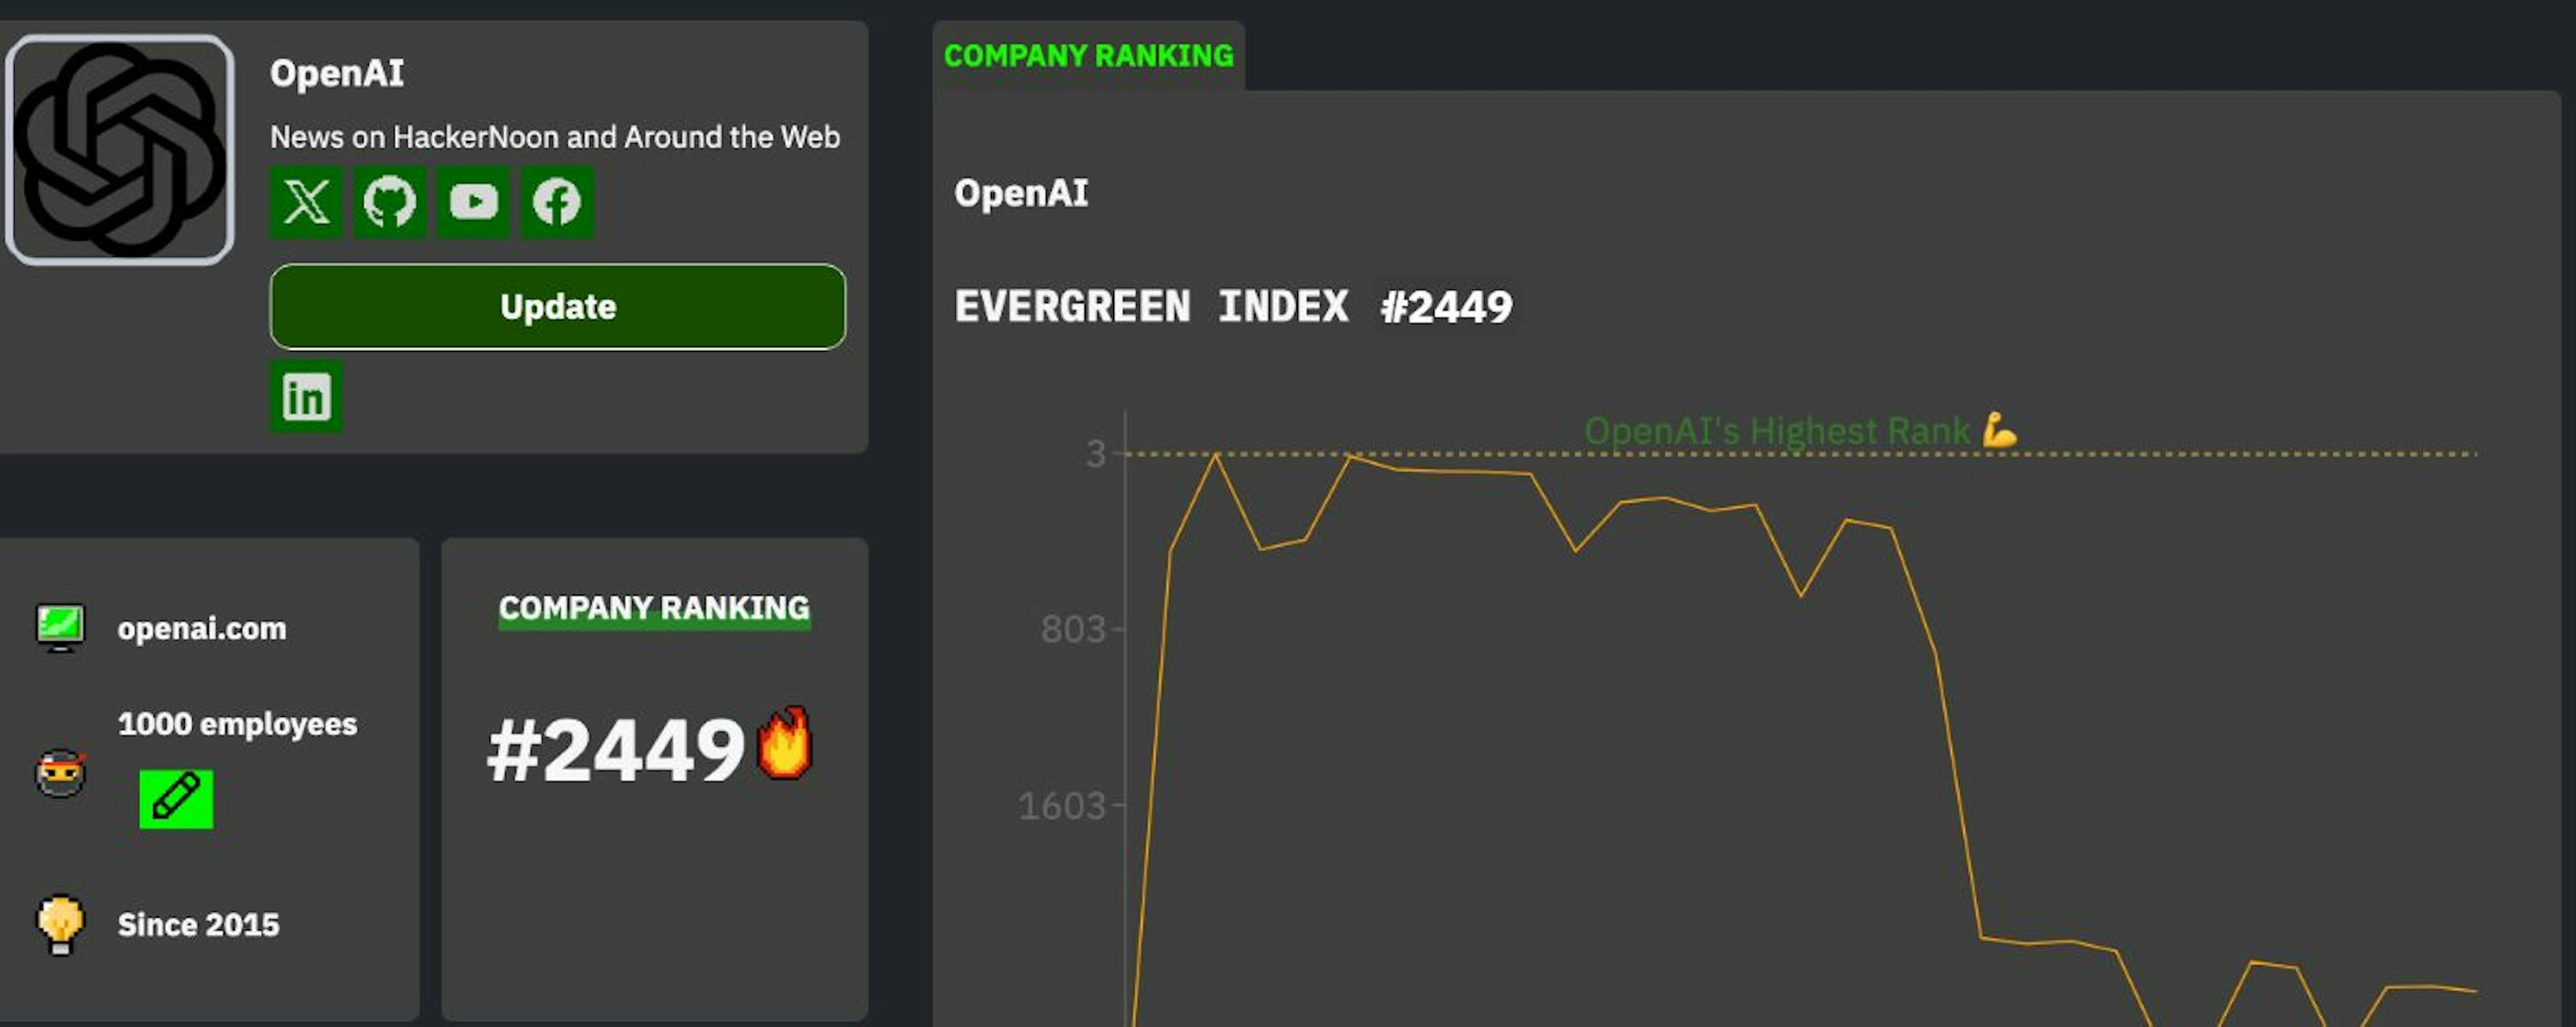 OpenAI's Tech Company Ranking